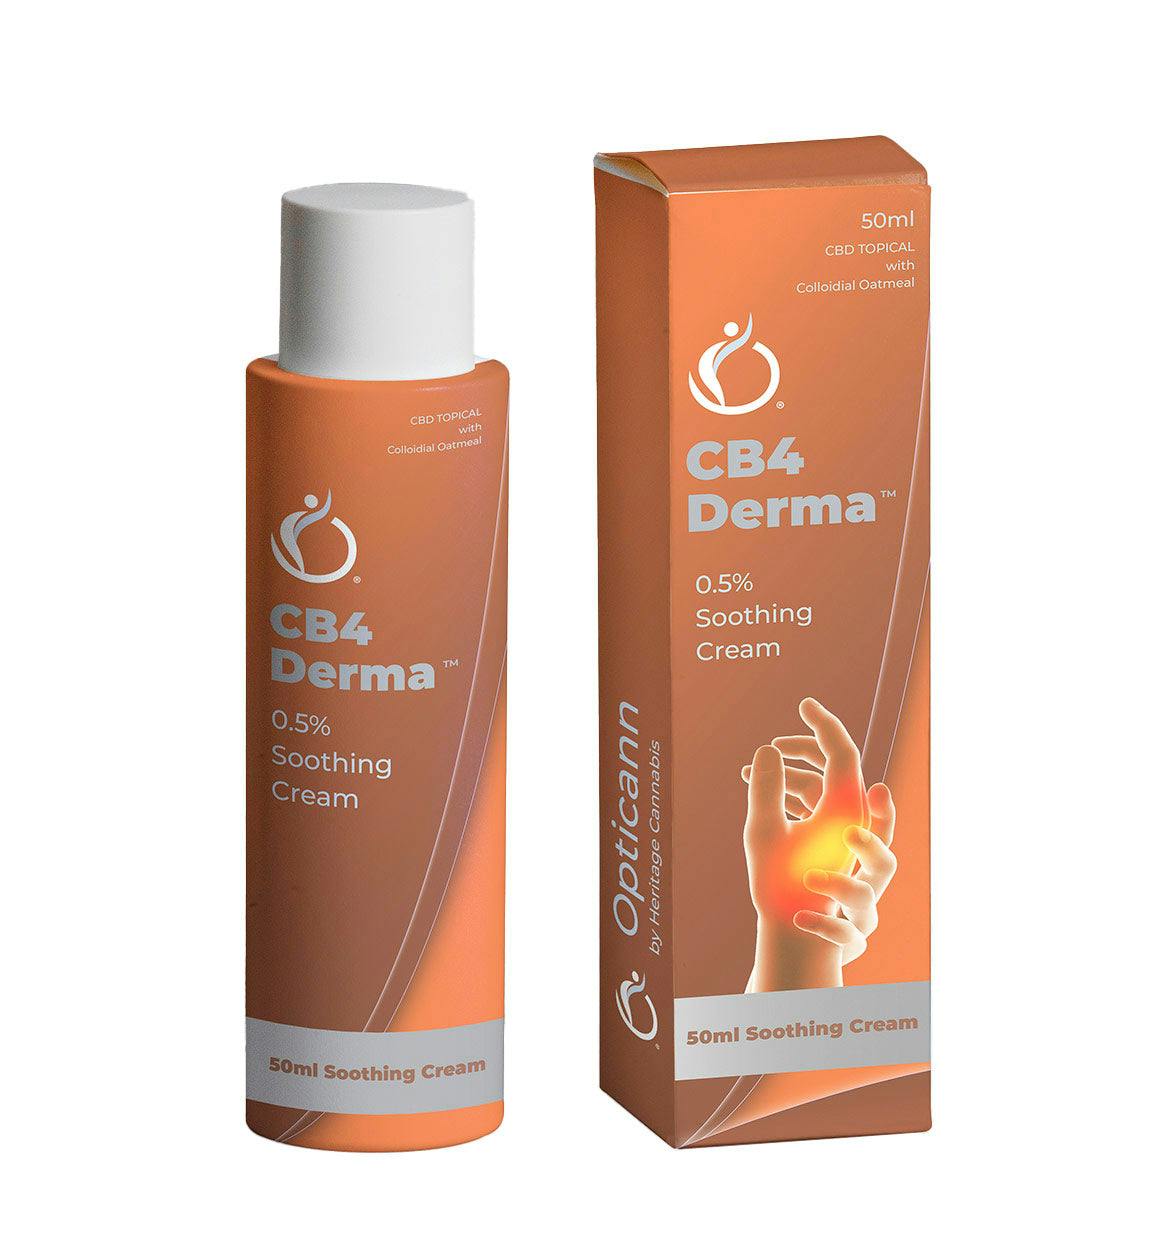 CB4 Derma 0.5% Soothing Cream